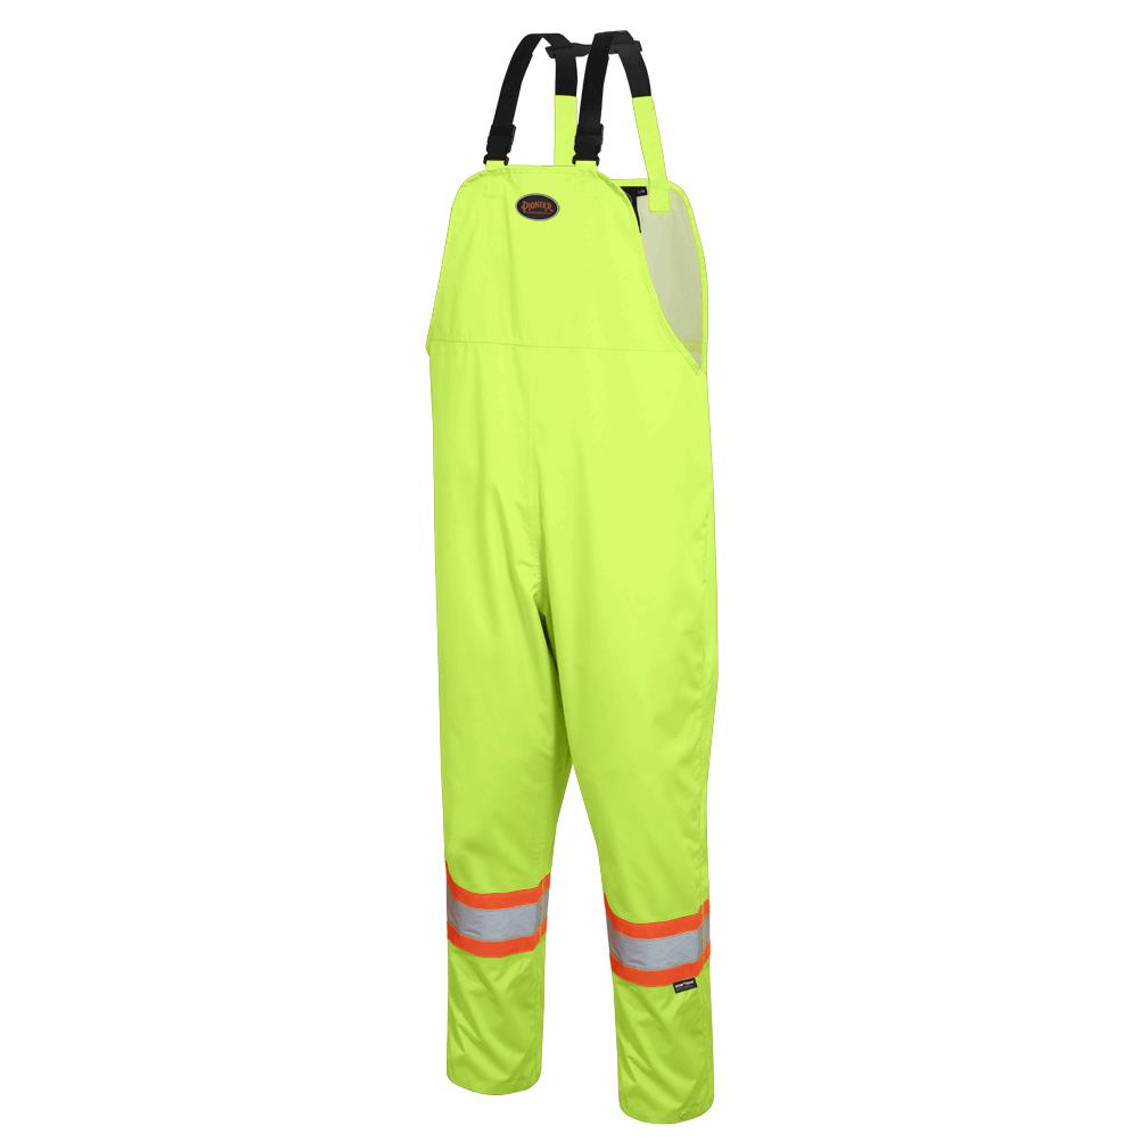 Pioneer 5629 "The Rock" Waterproof Safety Bib Pants - Hi-Viz Yellow/Green | Safetywear.ca